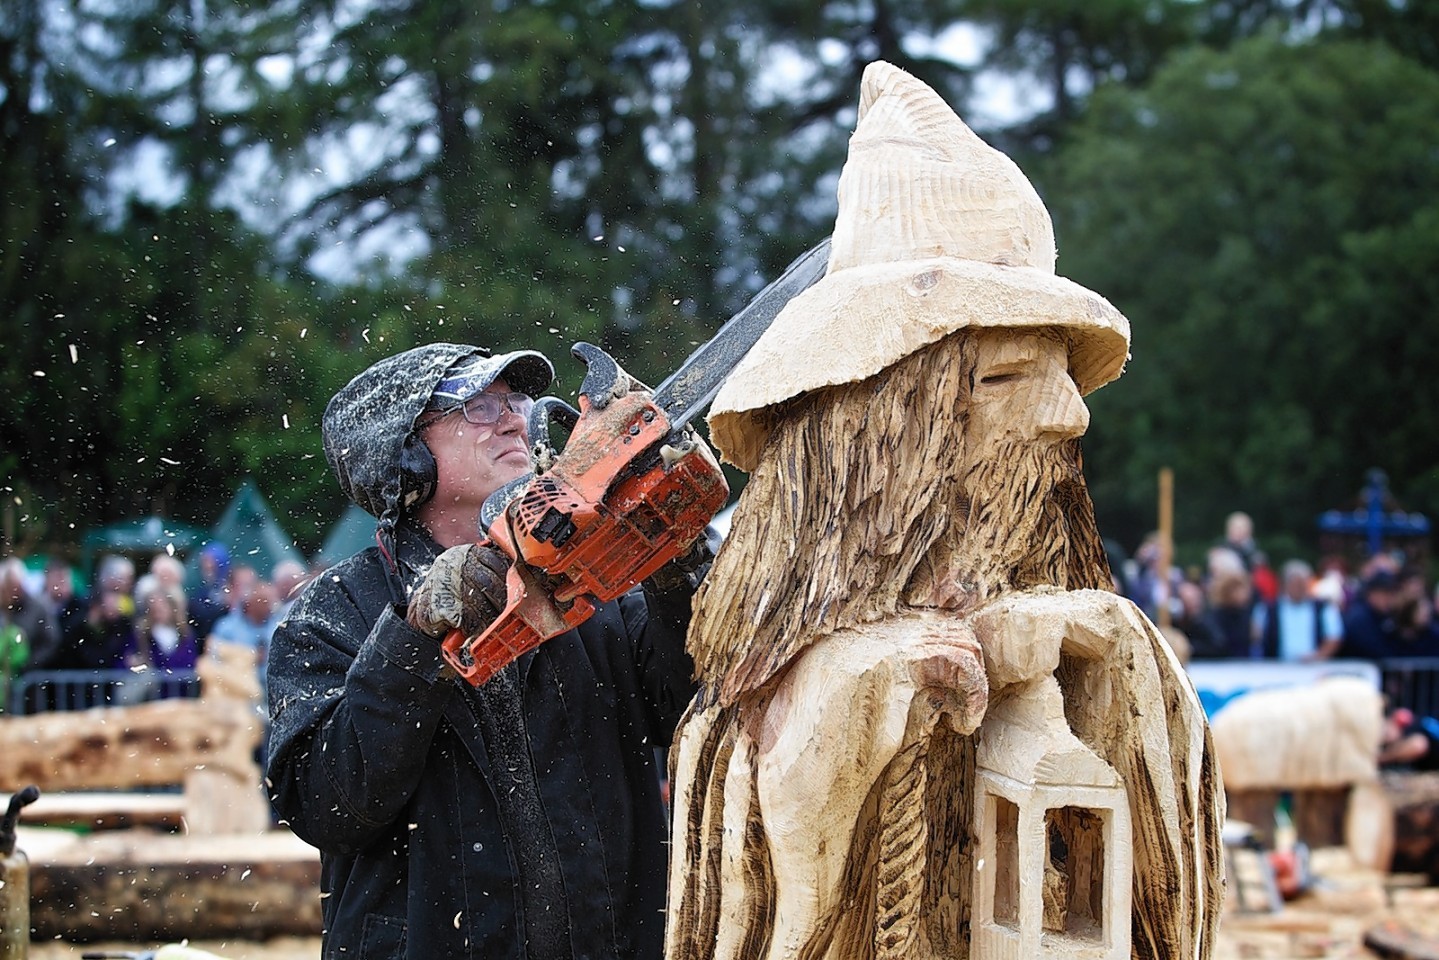 Adam Murray carves his sculpture